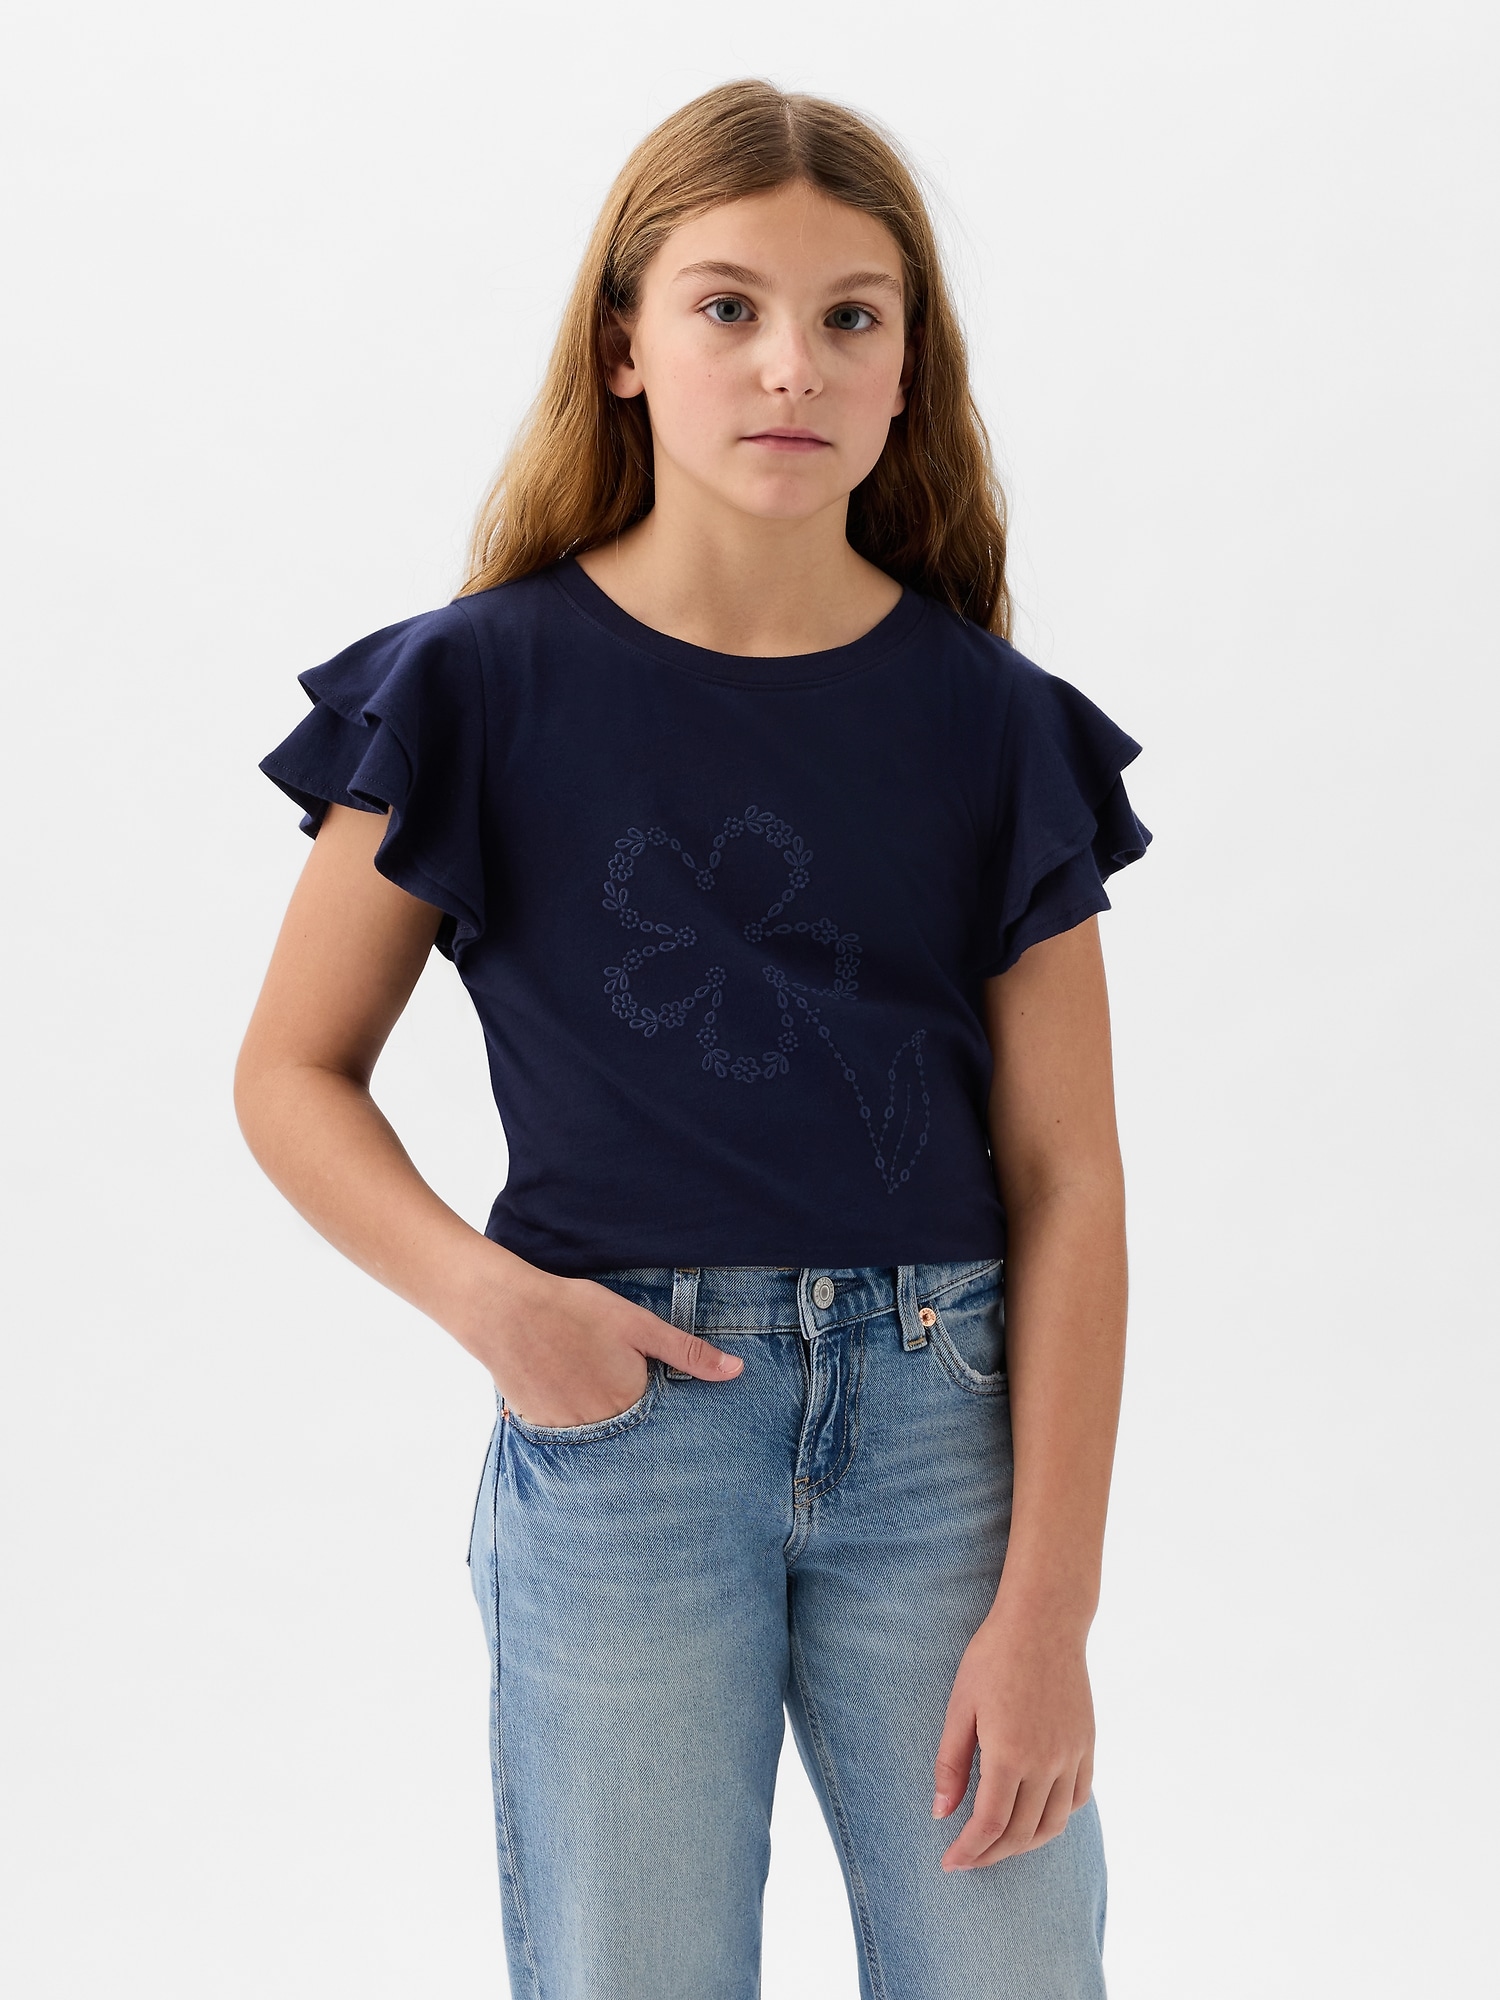 Kids Ruffle Graphic T-Shirt | Gap